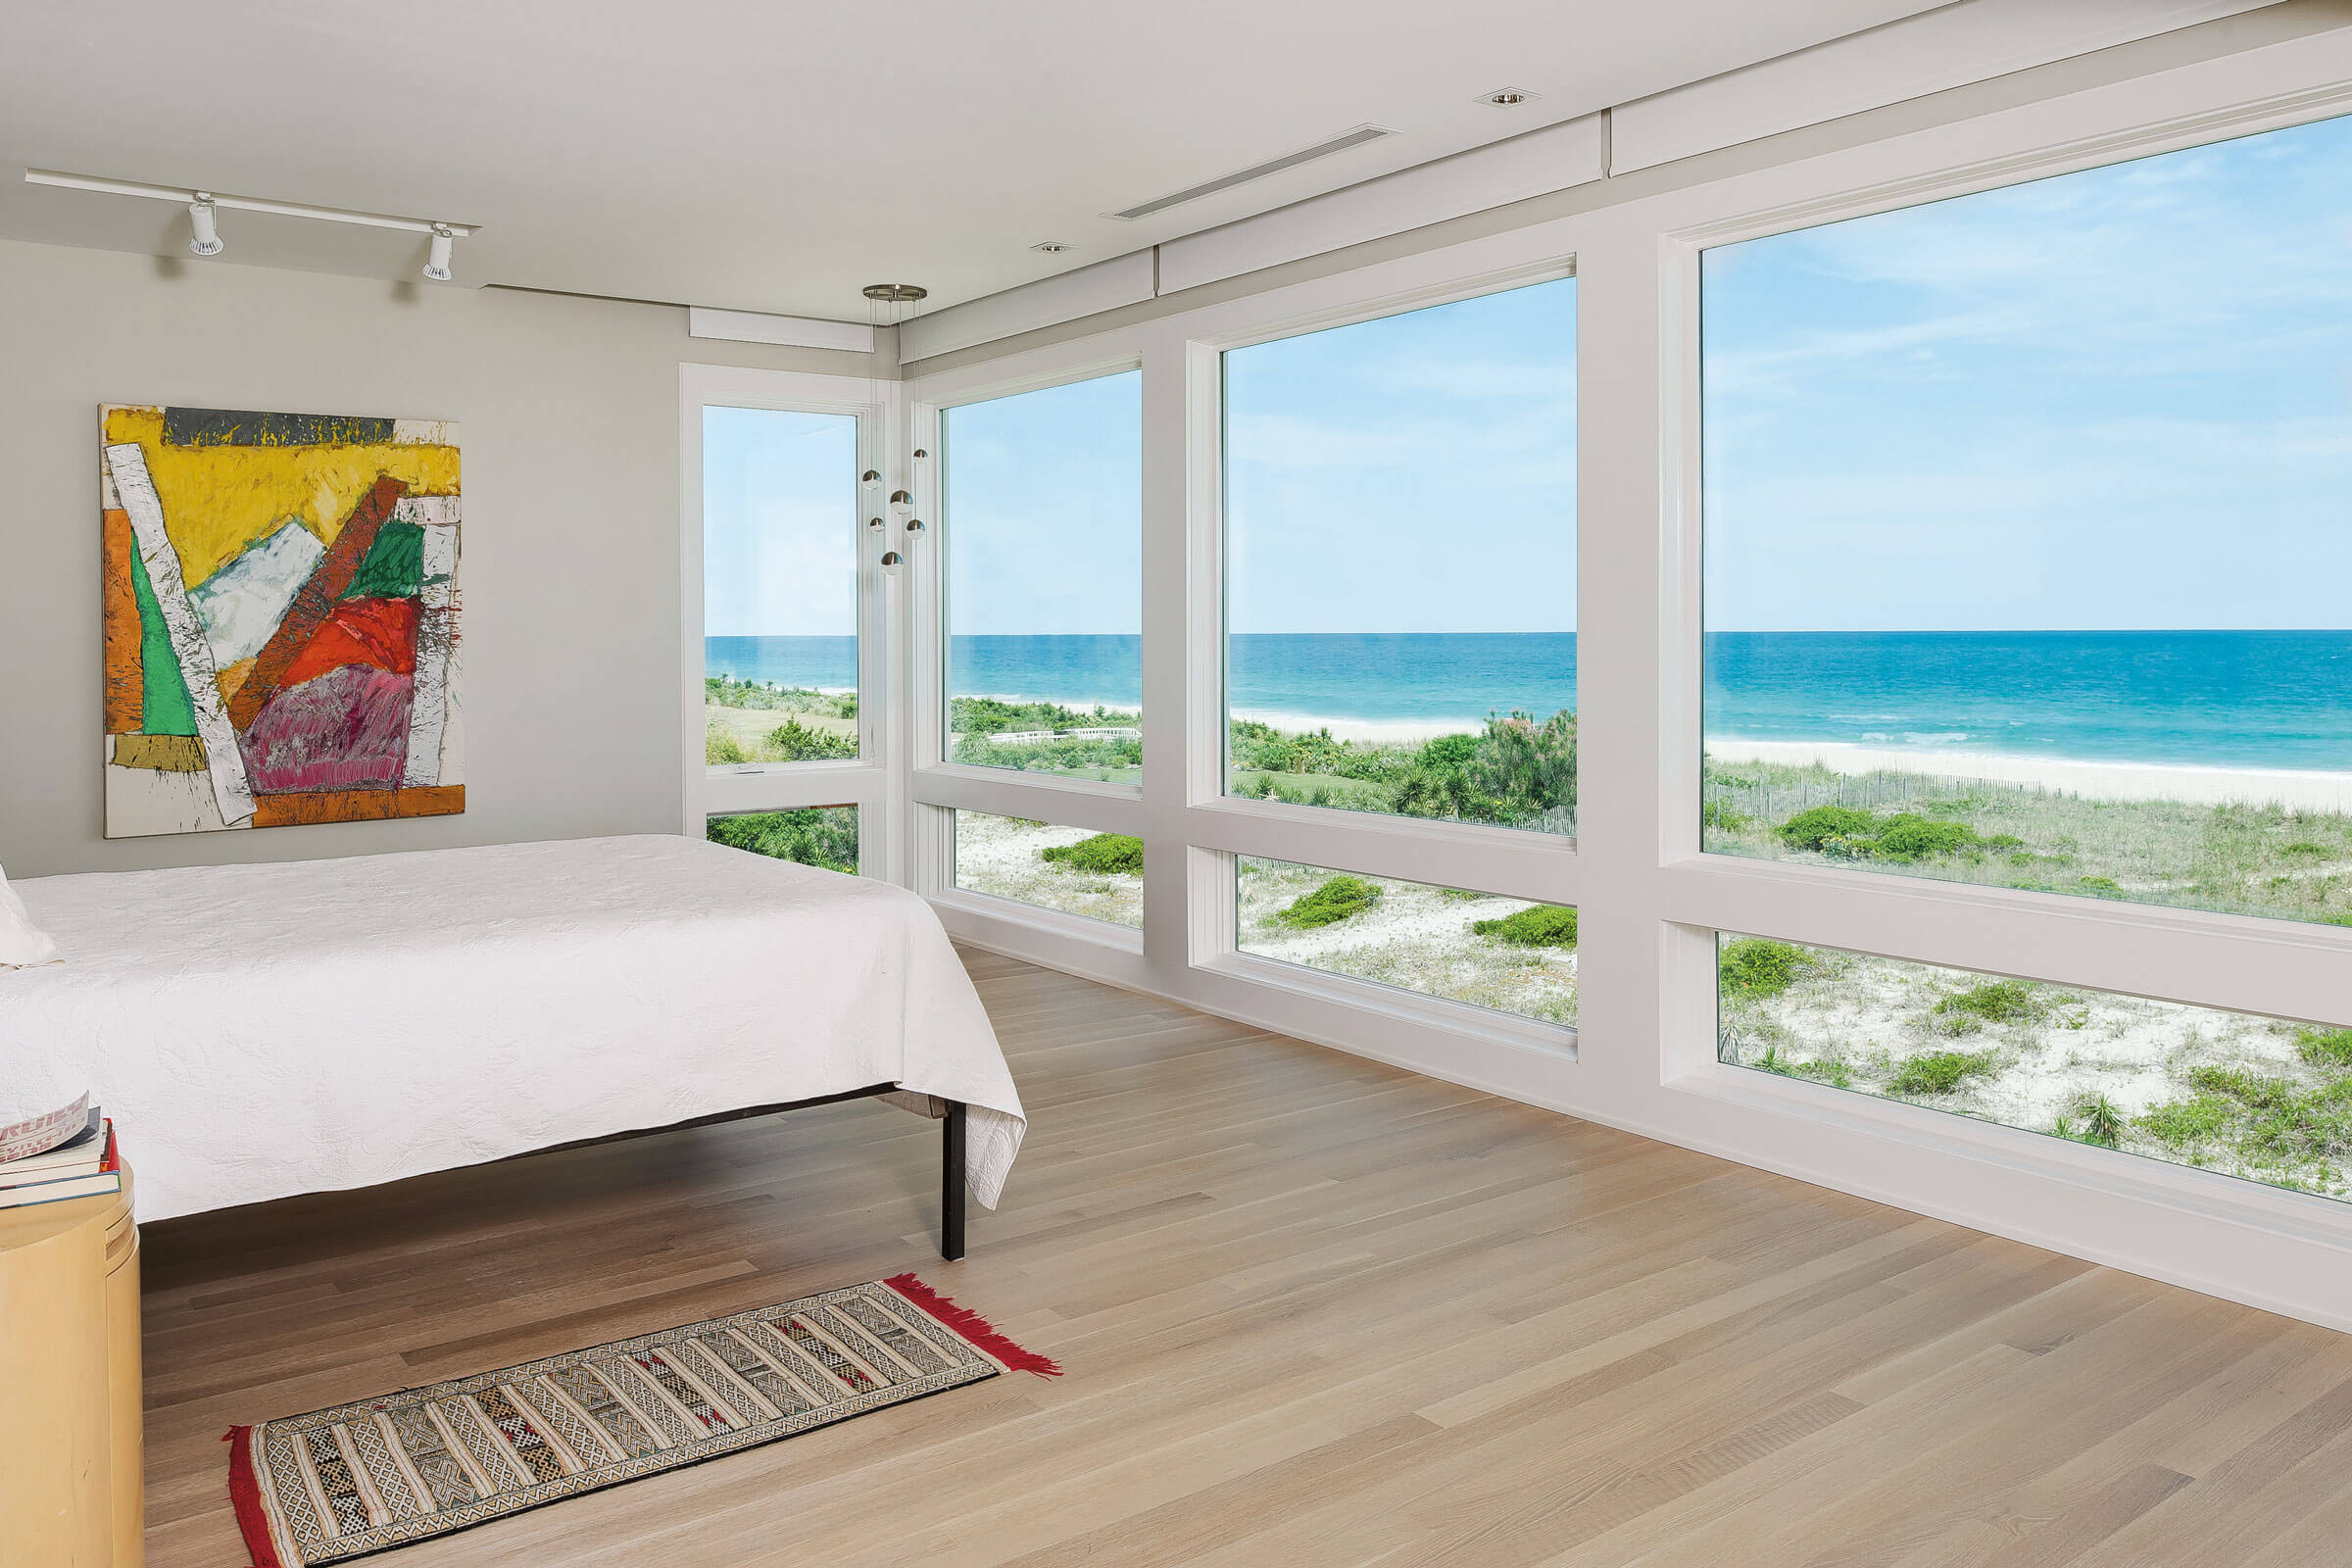 marvin-elevate-coastal-interior-bedroom-surf-gallery-rda-casement-picture